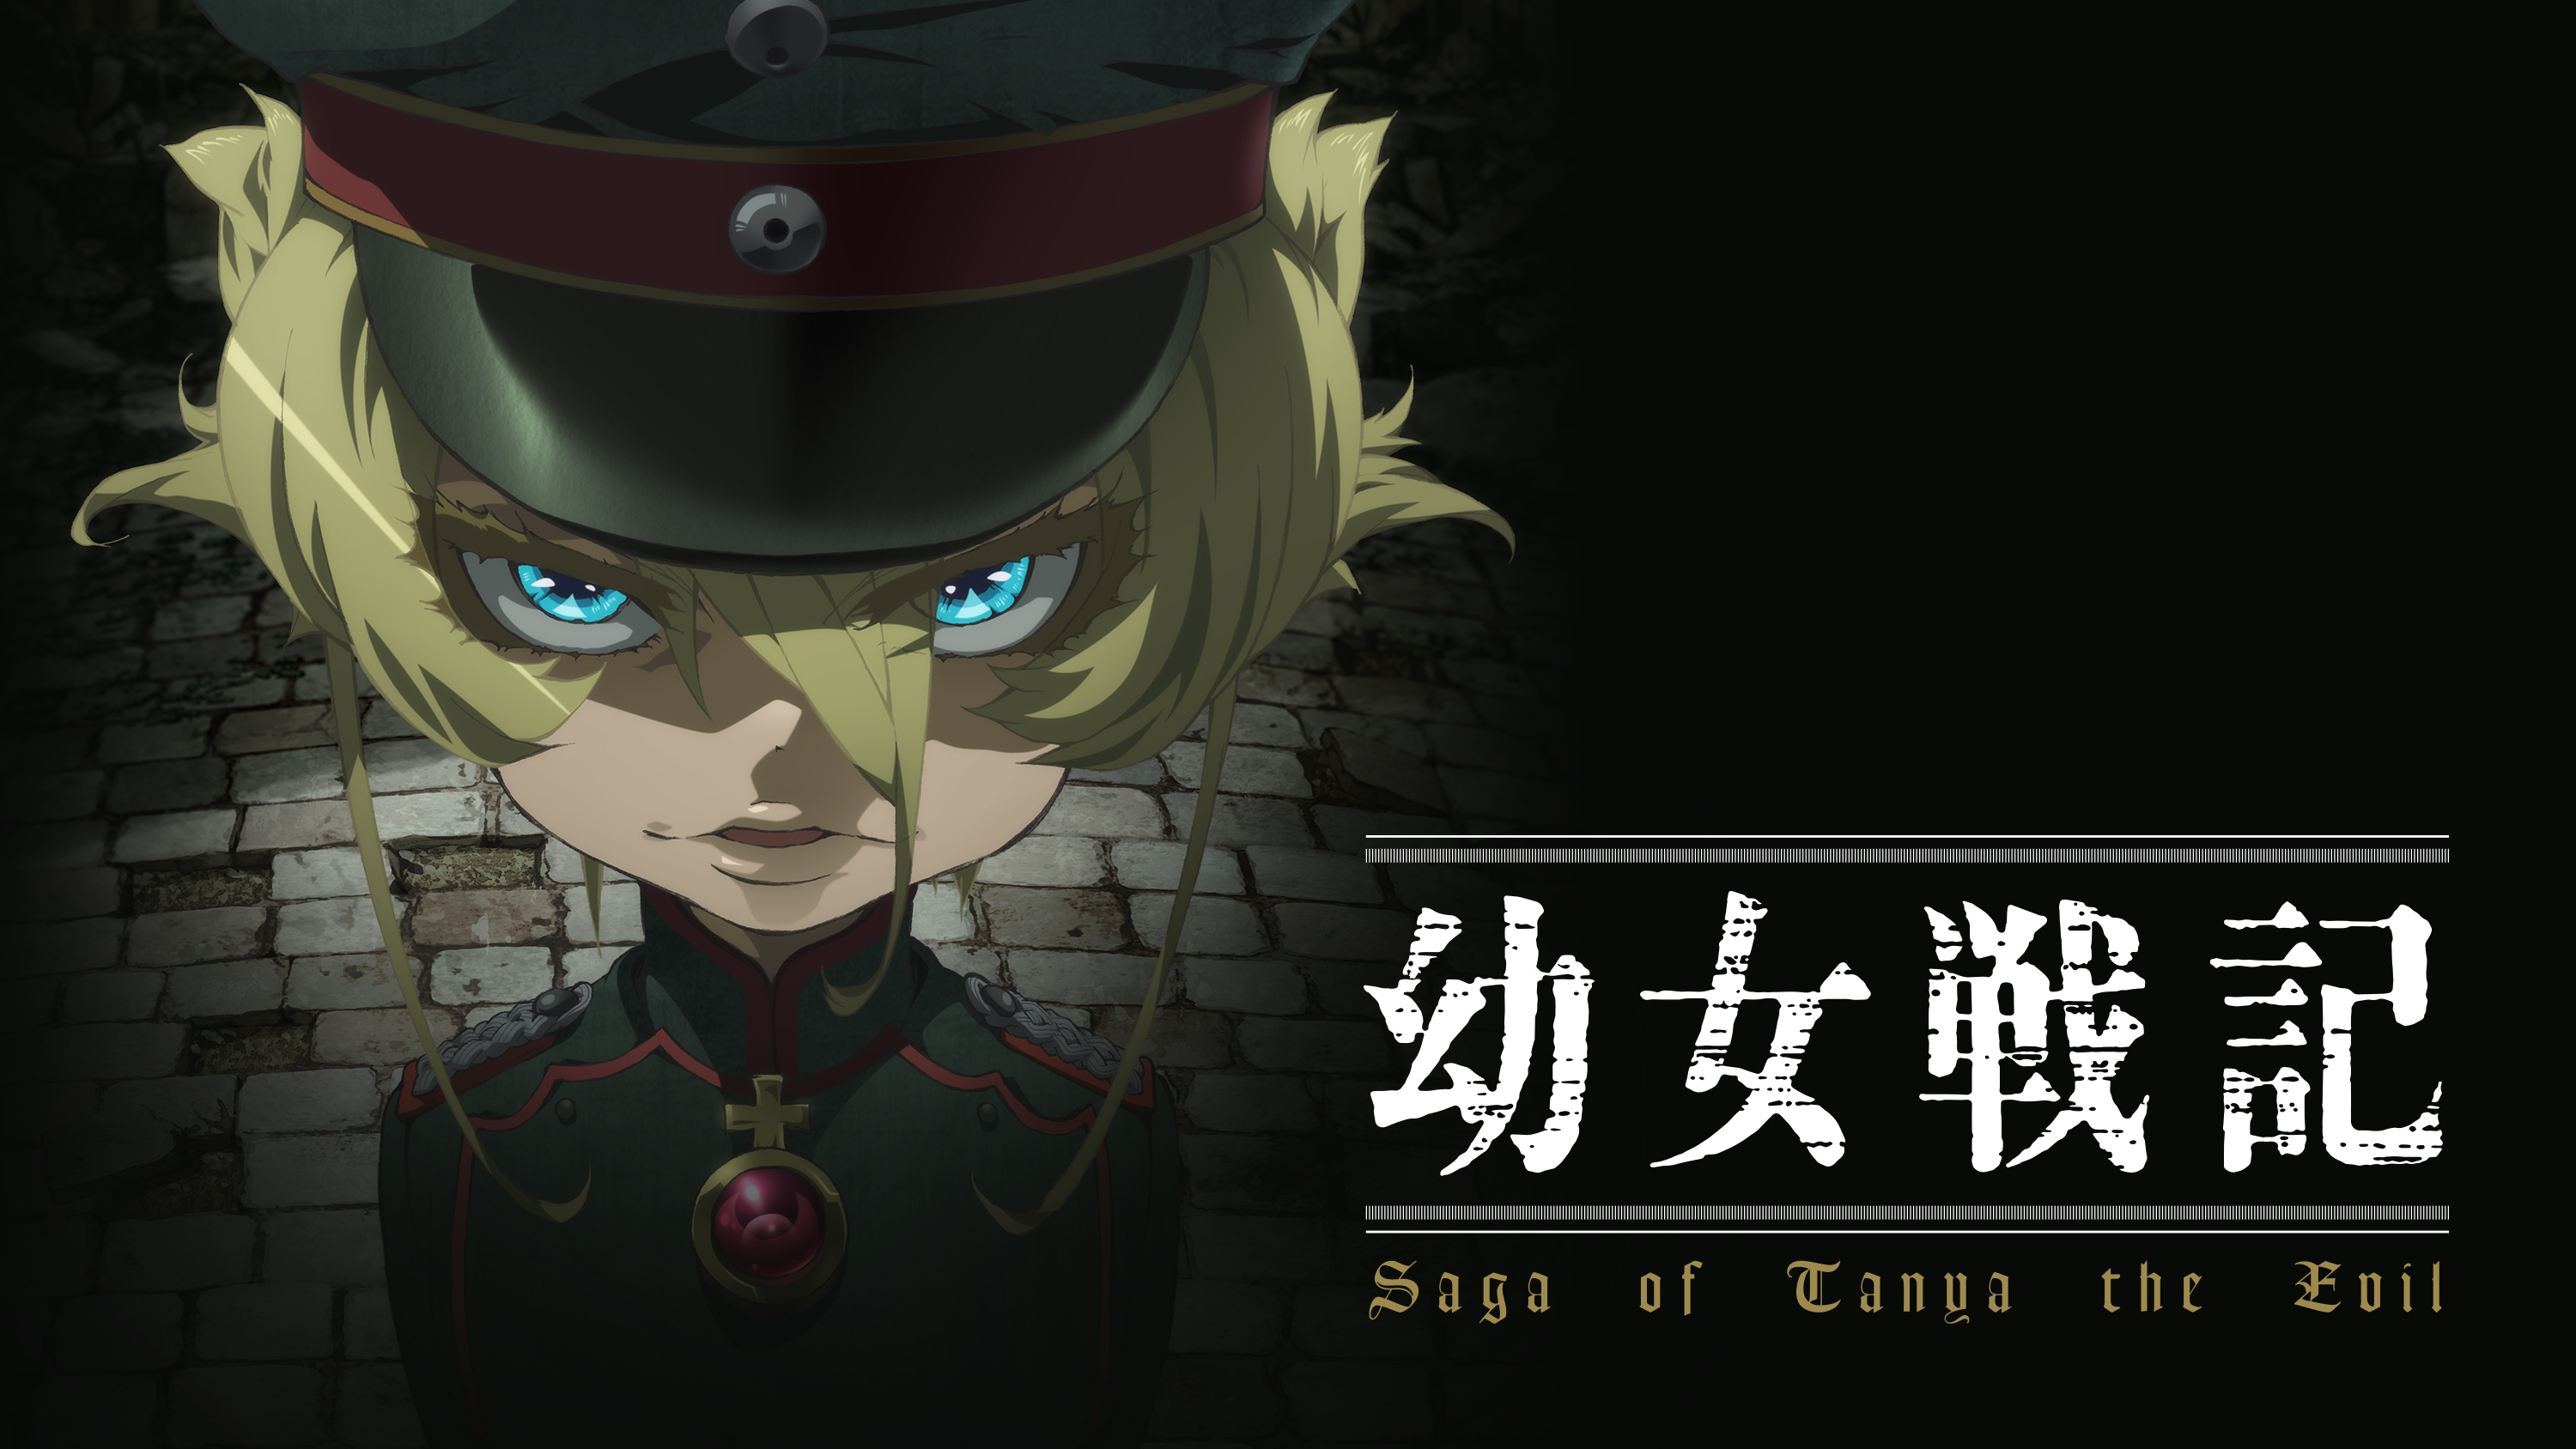 Mejor anime de guerra - Saga of tanya the evil